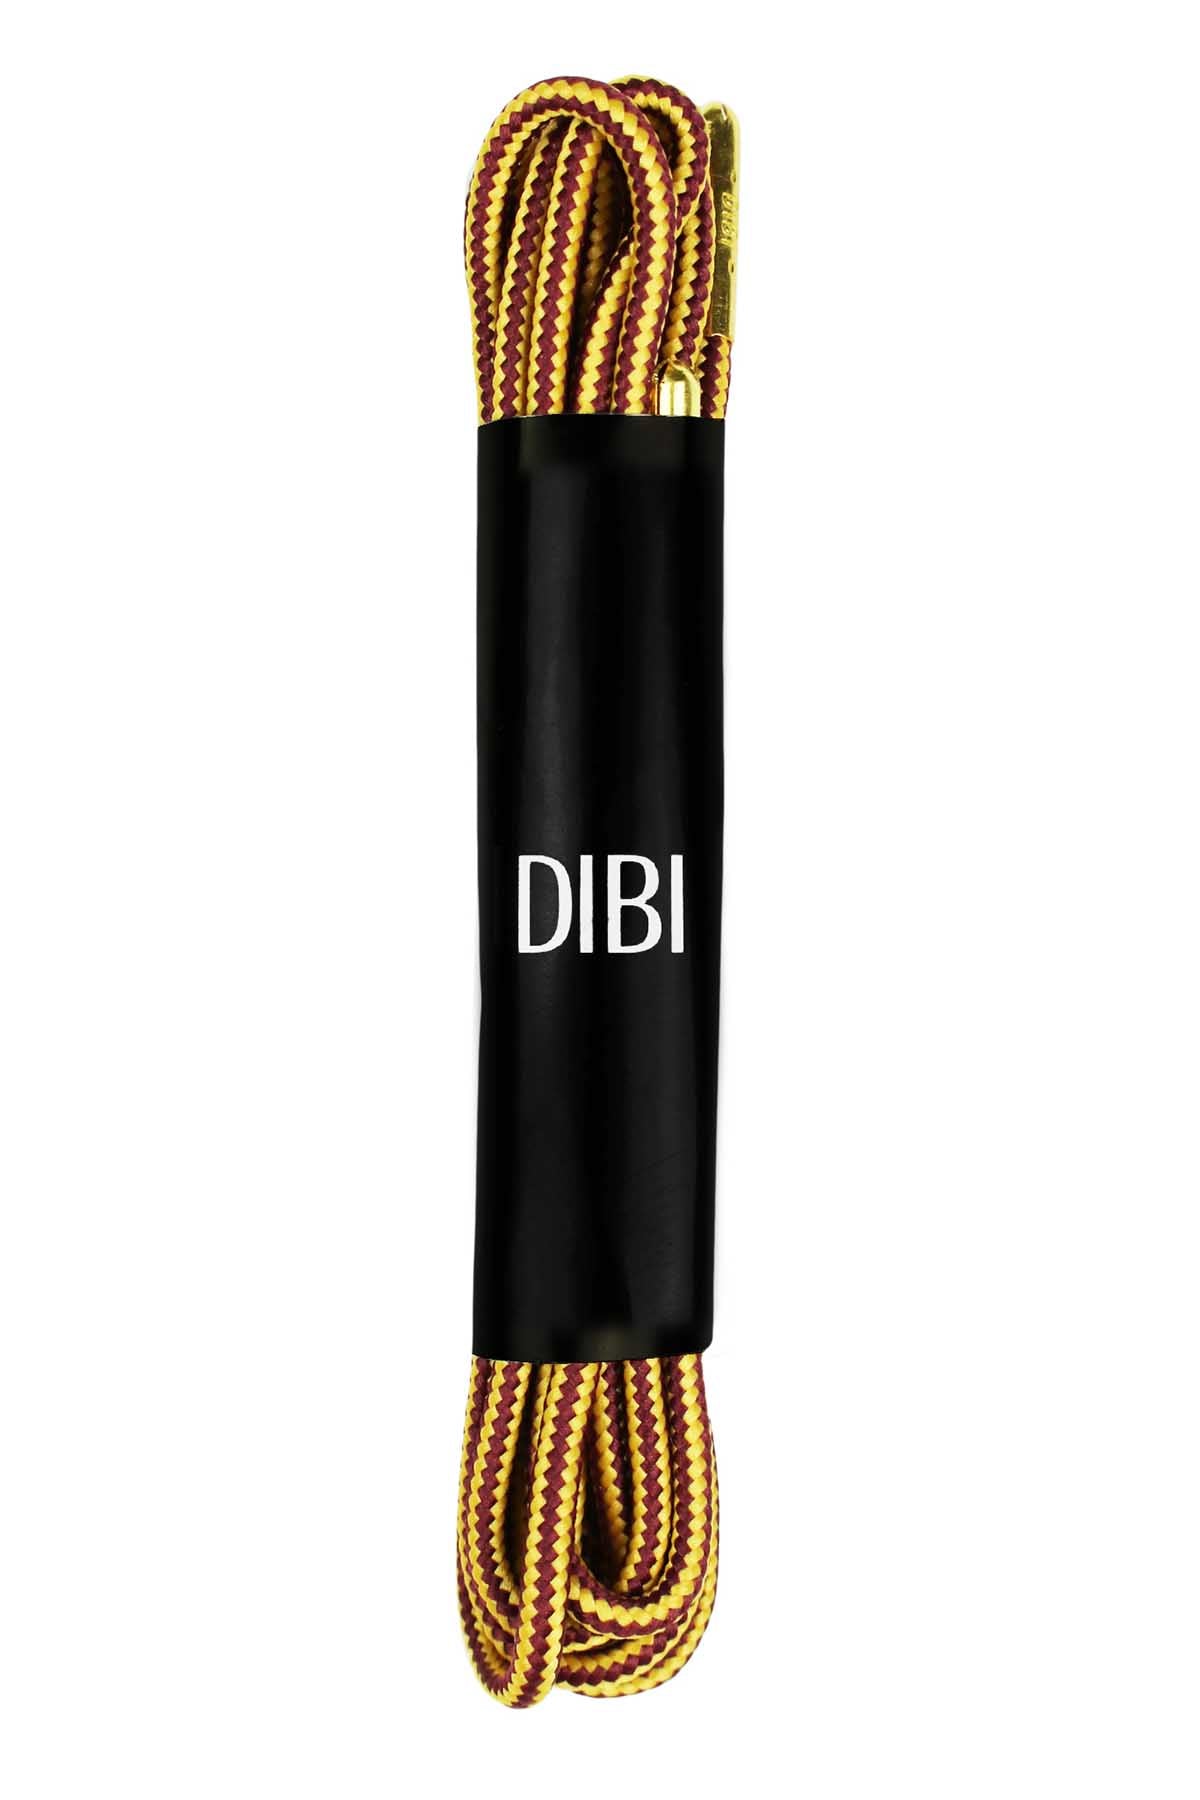 DIBI Burgundy/Gold Striped Dress Shoelaces w/ Gold Aglets